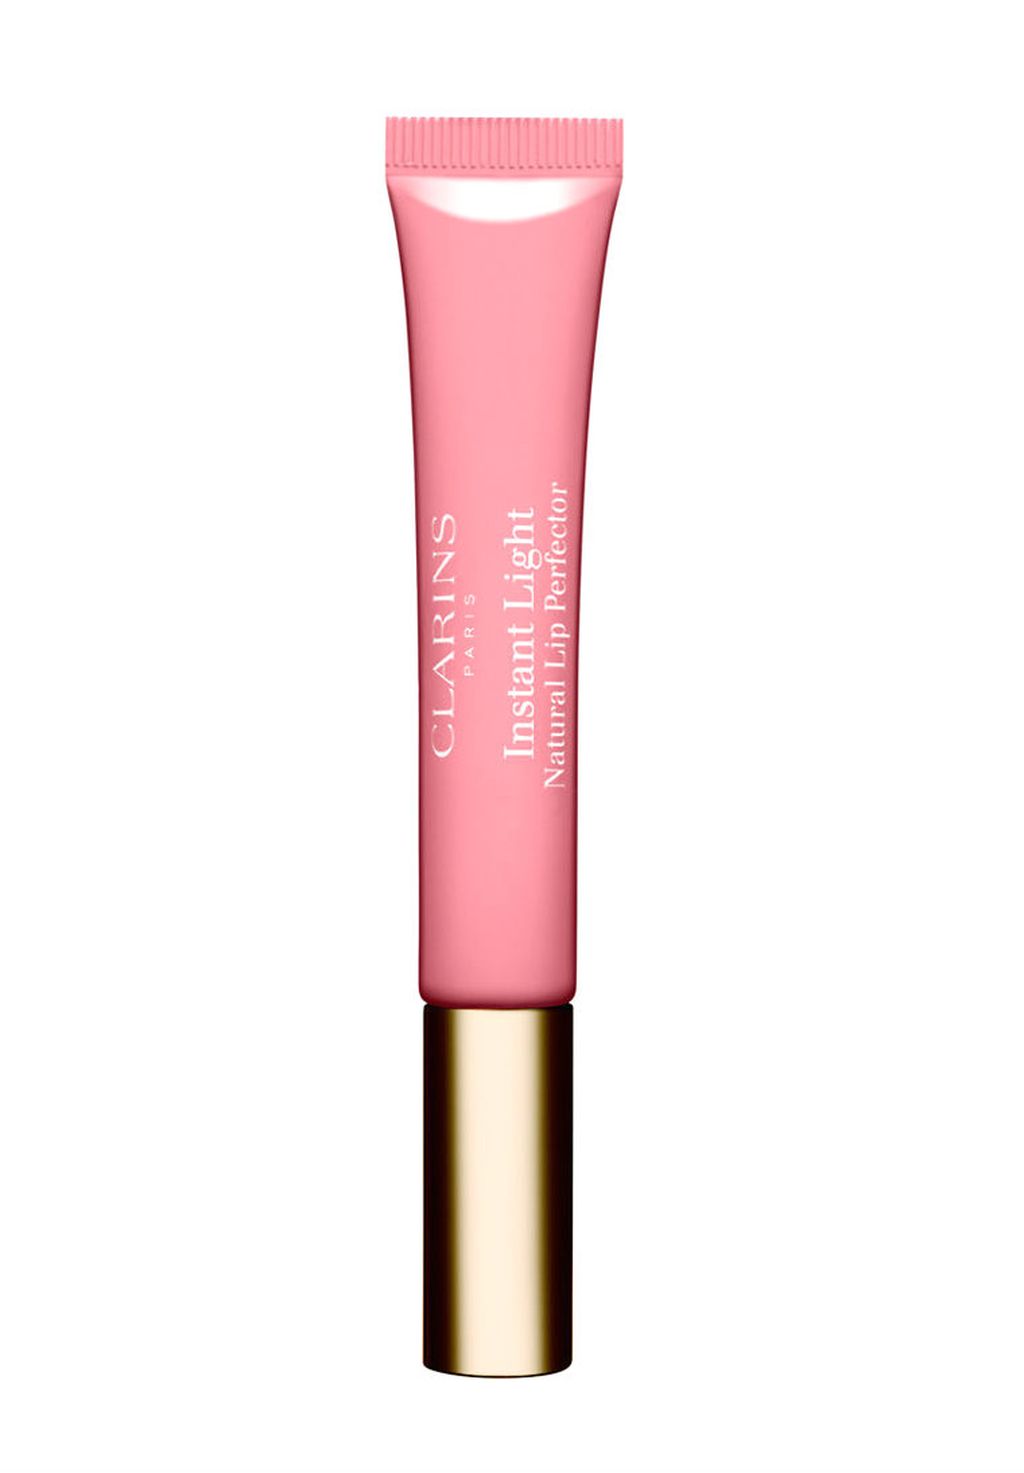 Clarins Instant Light Natural Lip Perfector (Rose Shimmer), 145 kuna